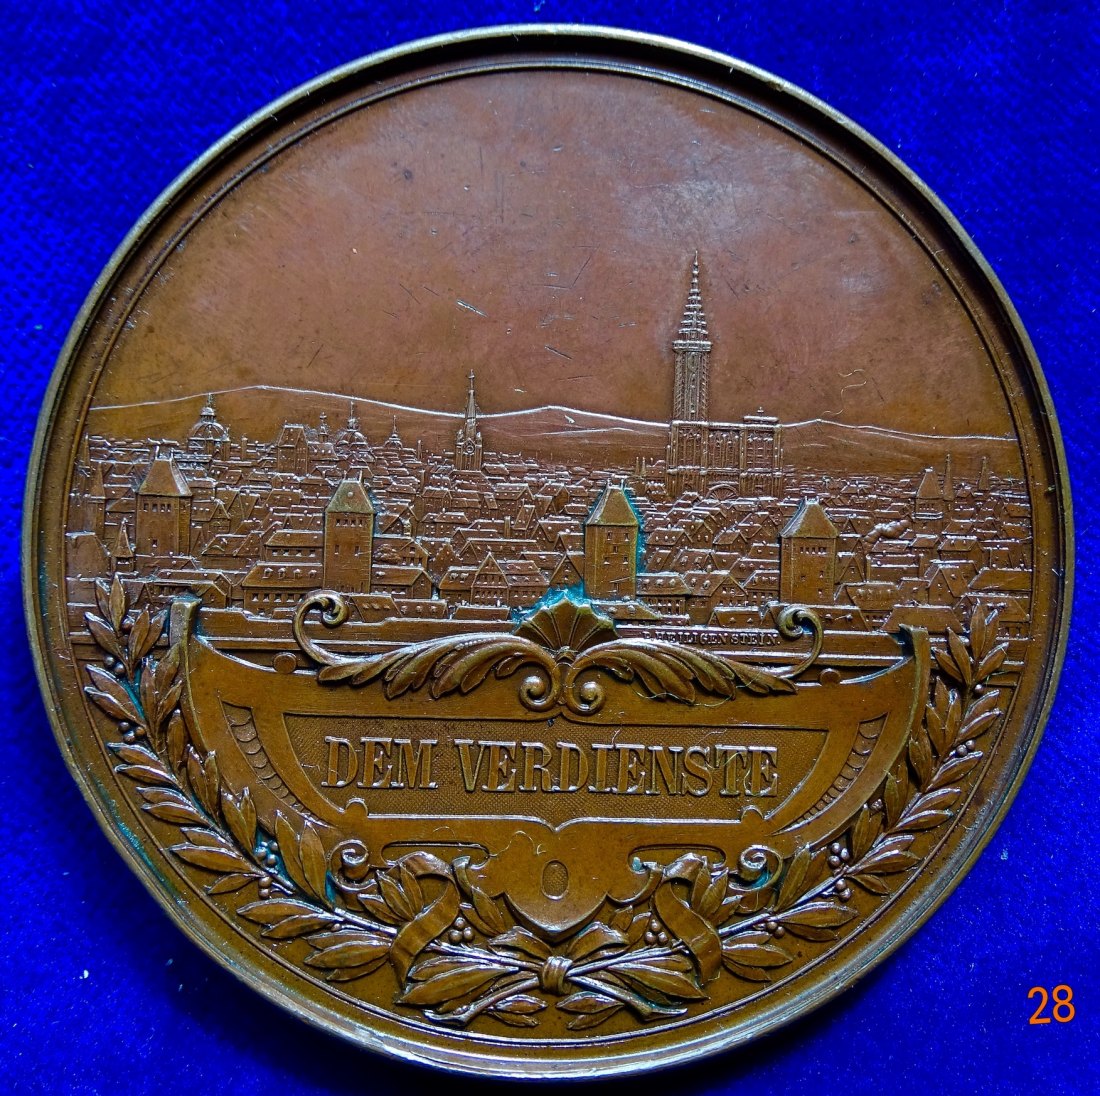  Straßburg, Elsaß- Lothringen (Reichsland), Baden, Pfalz, 1895 Industrie- Gewerbeausstellung Medaille   